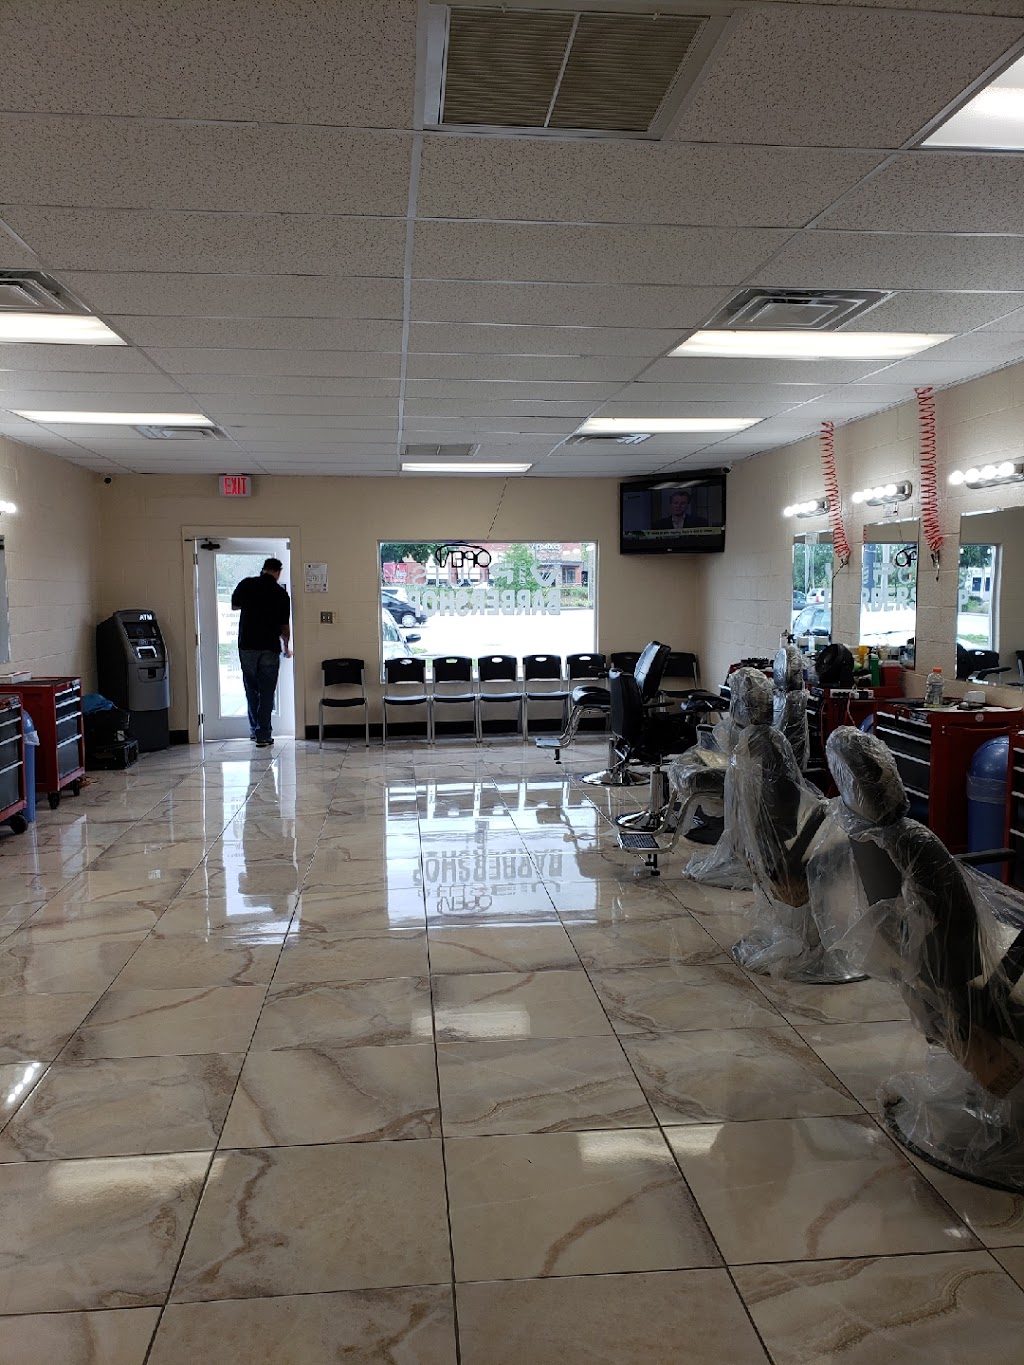 Vip Cuts Barbershop Inc | 3034 s hwy #17-92, Casselberry, FL 32707 | Phone: (407) 755-6500